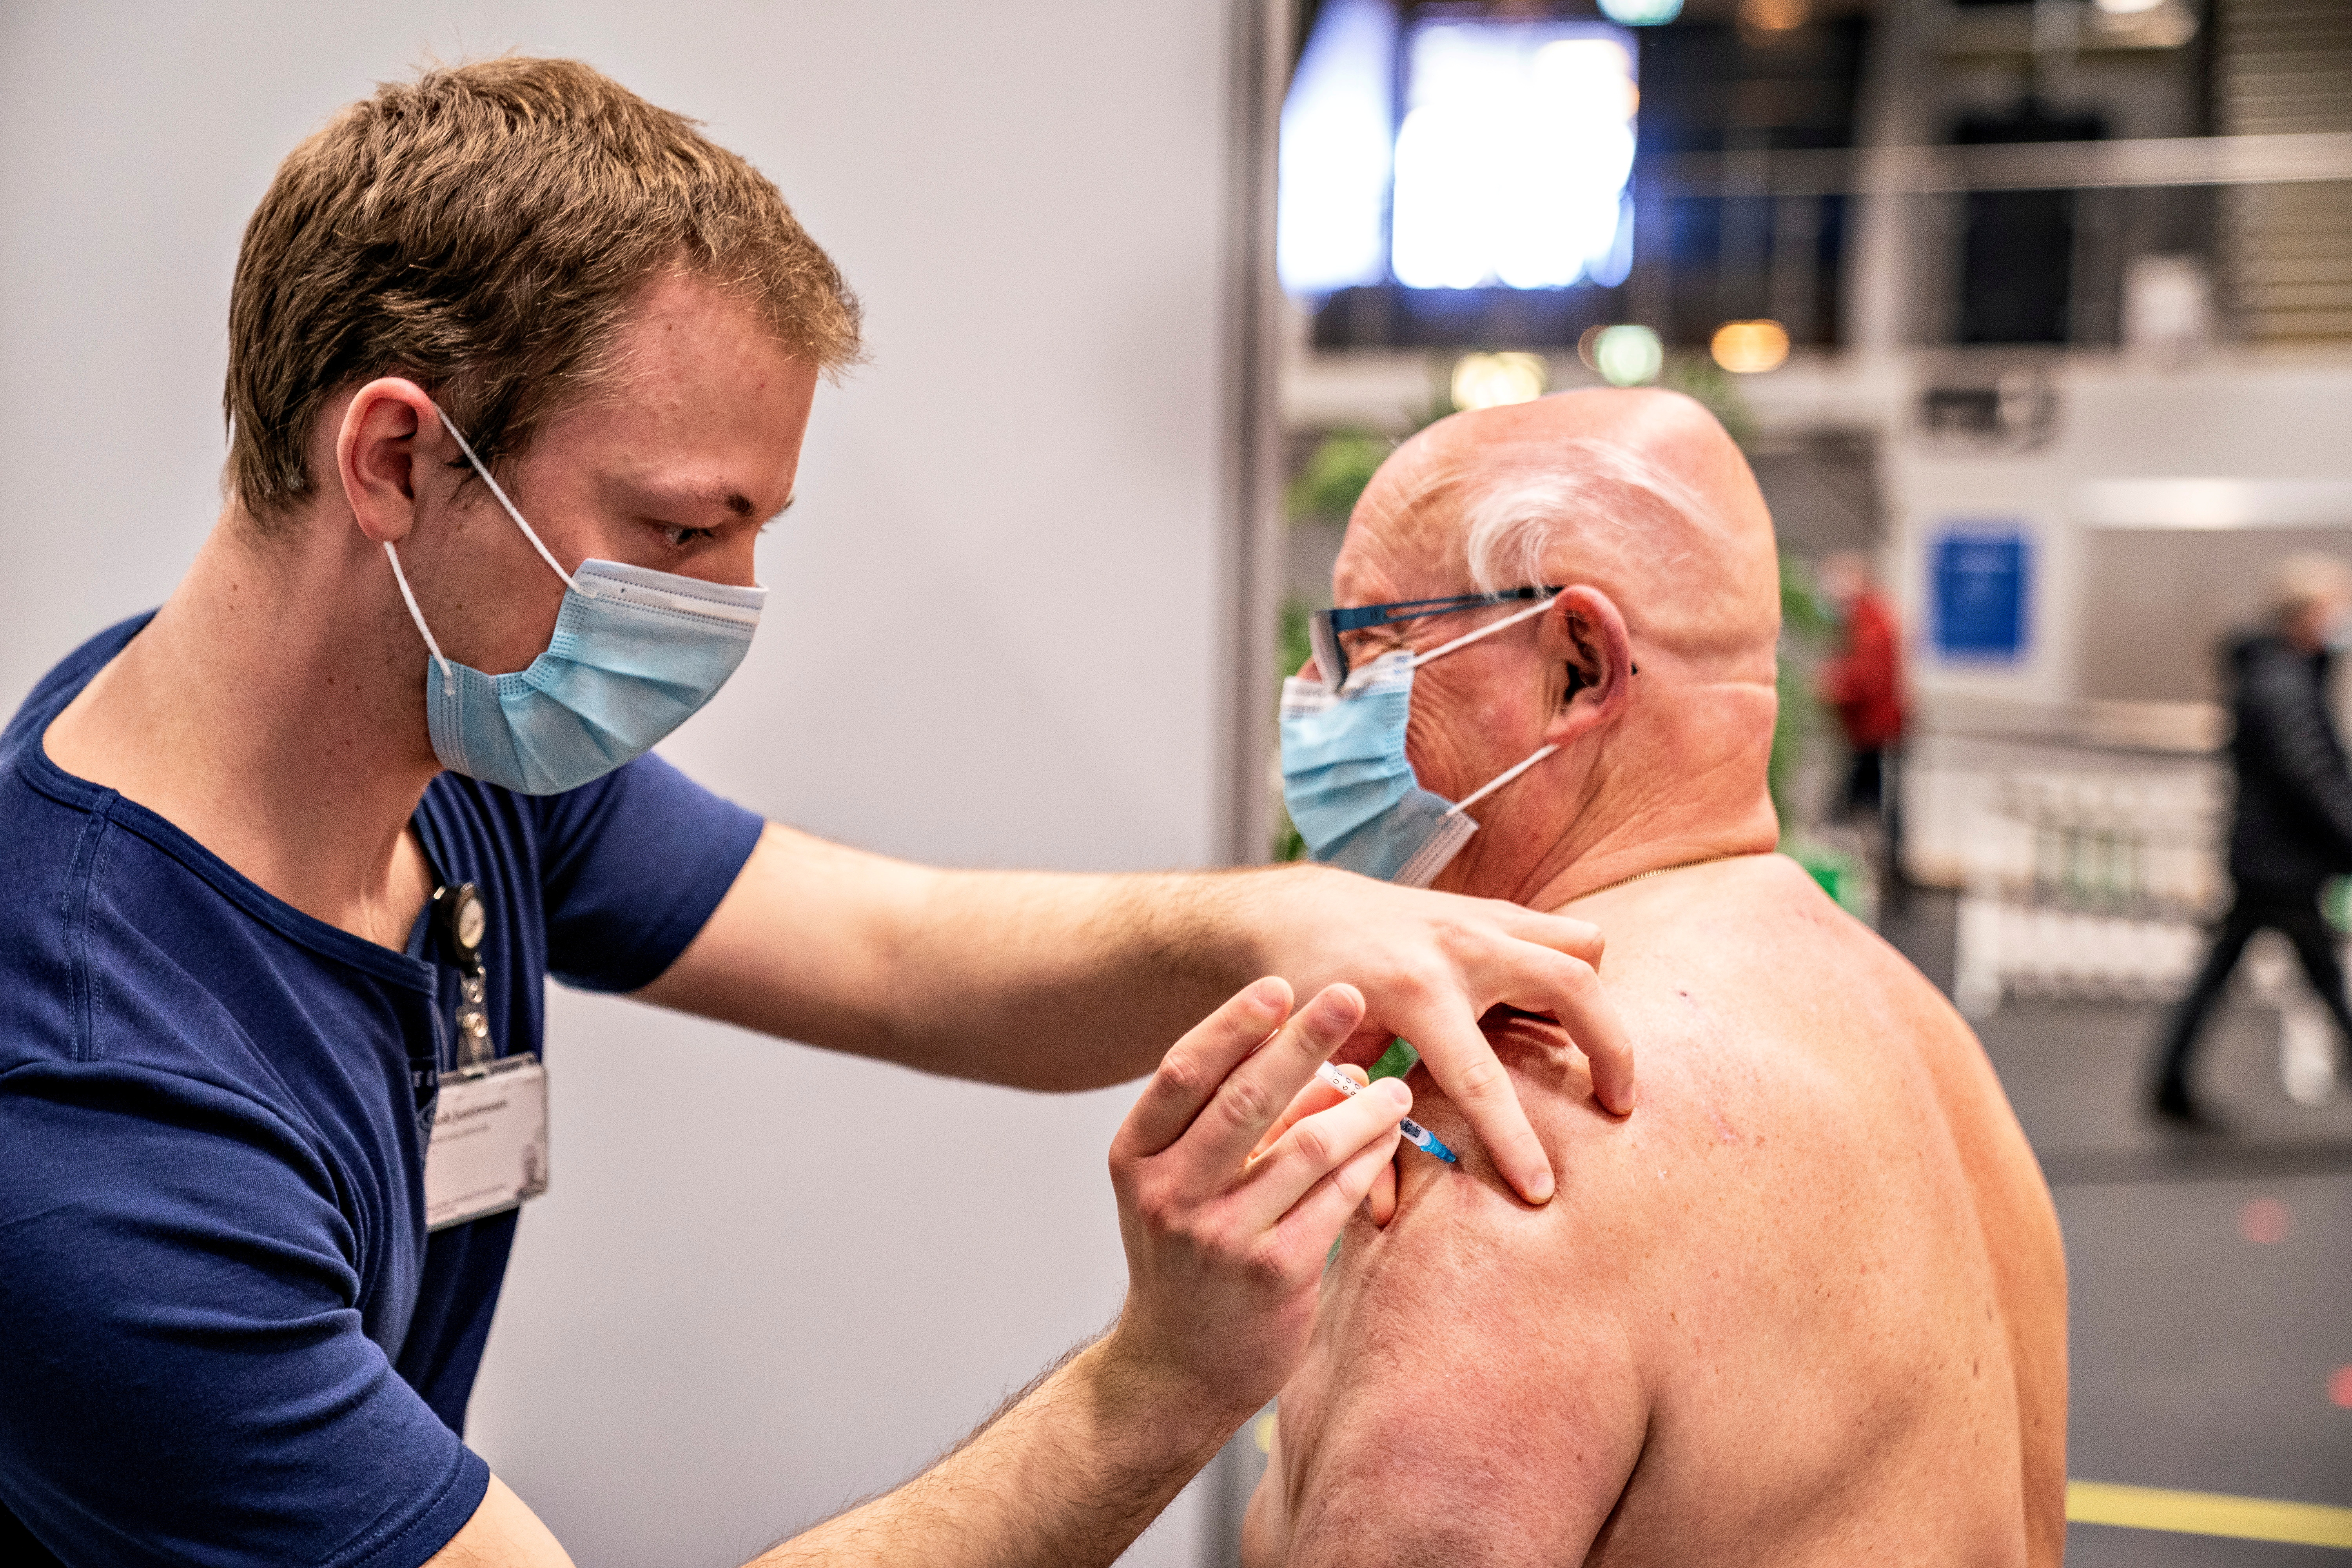 A medical worker vaccinates a man against the coronavirus disease (COVID-19) in Frederikshavn, Jutland, Denmark, April 12, 2021. Henning Bagger/ Ritzau Scanpix/via REUTERS